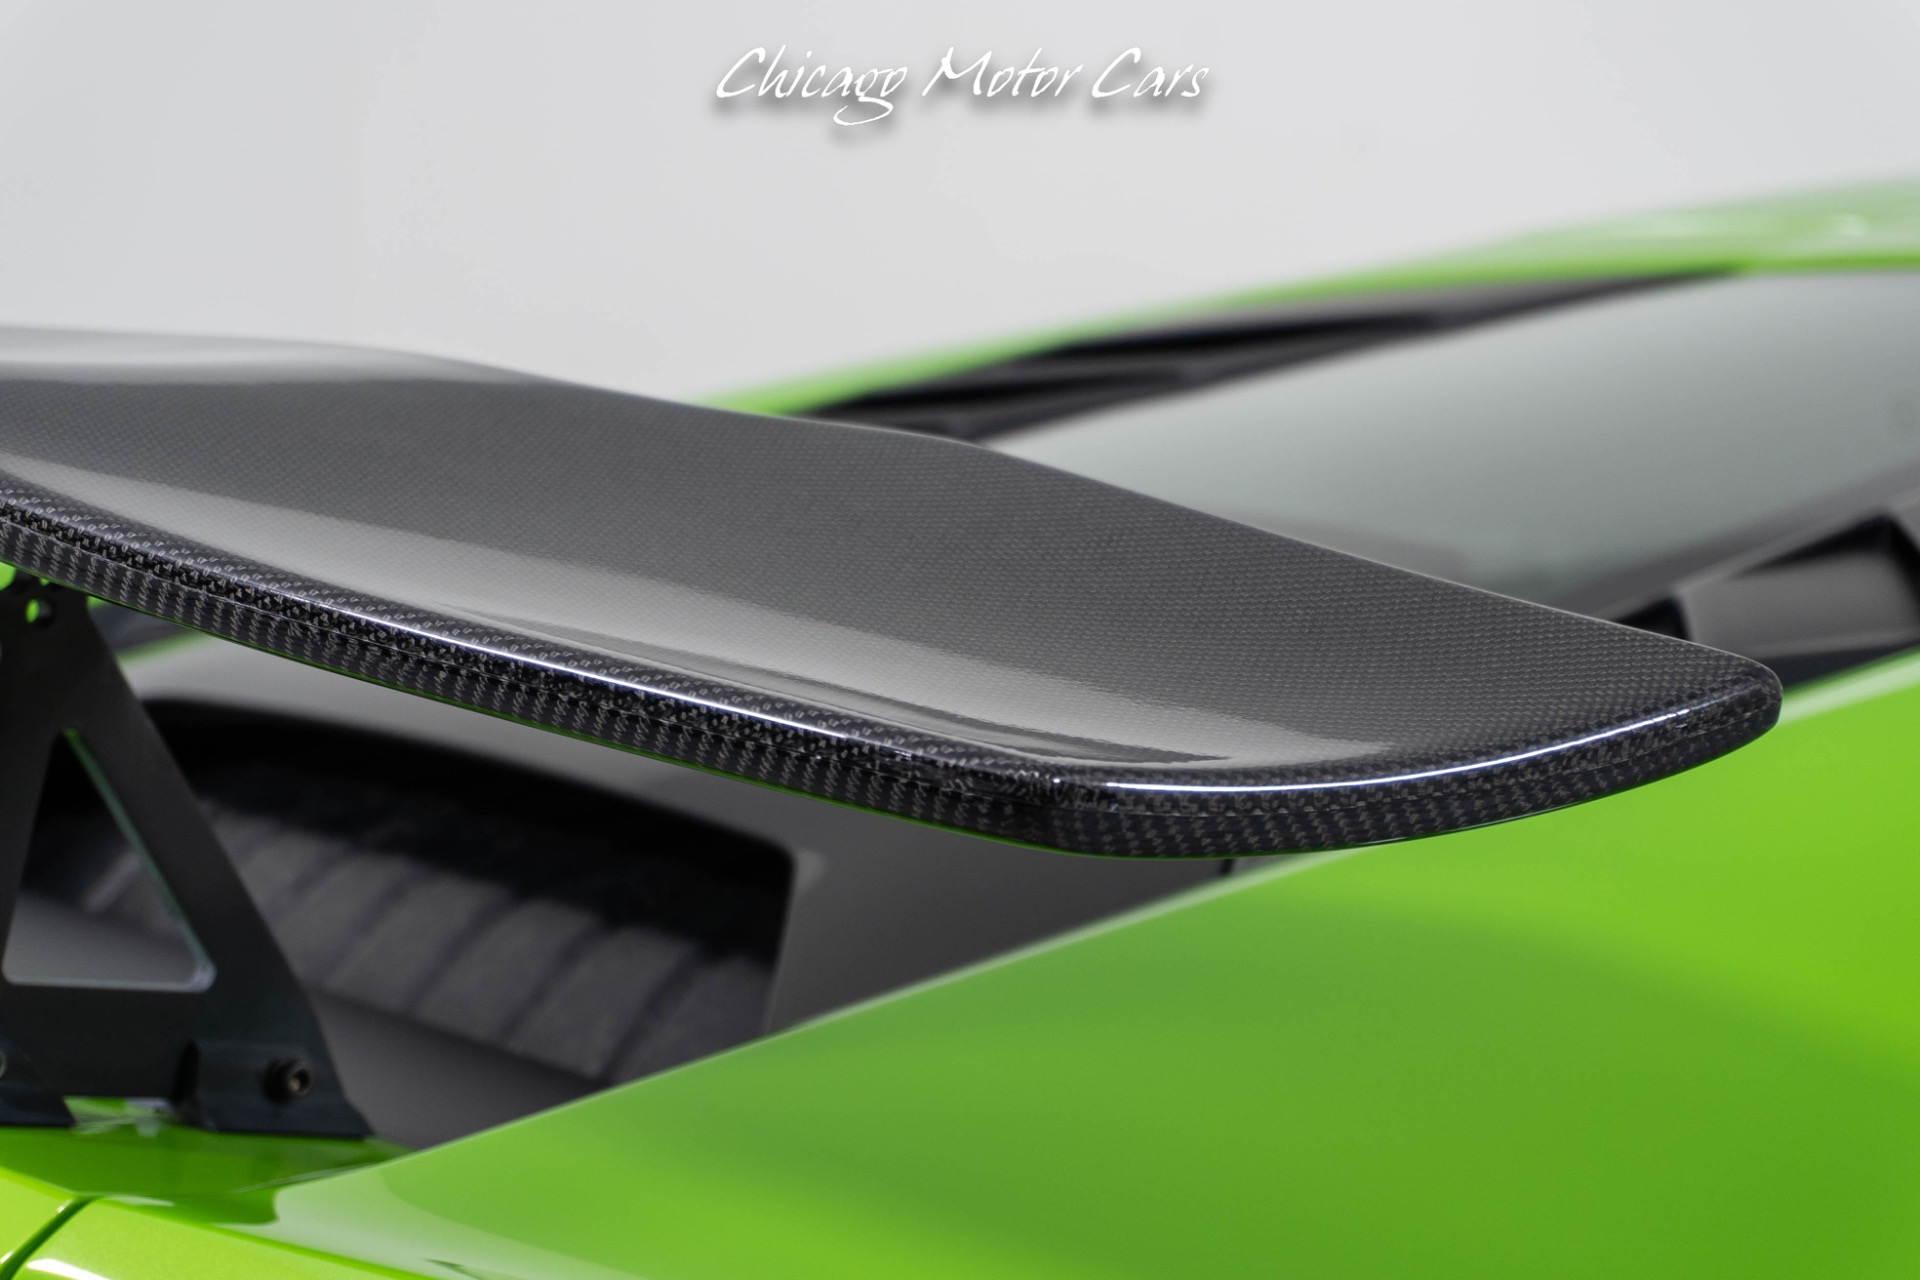 Used-2015-Lamborghini-Huracan-LP610-4-Coupe-Verde-Mantis-Finish-FRONT-PPF-SOUL-PERFORMANCE-EXHAUST